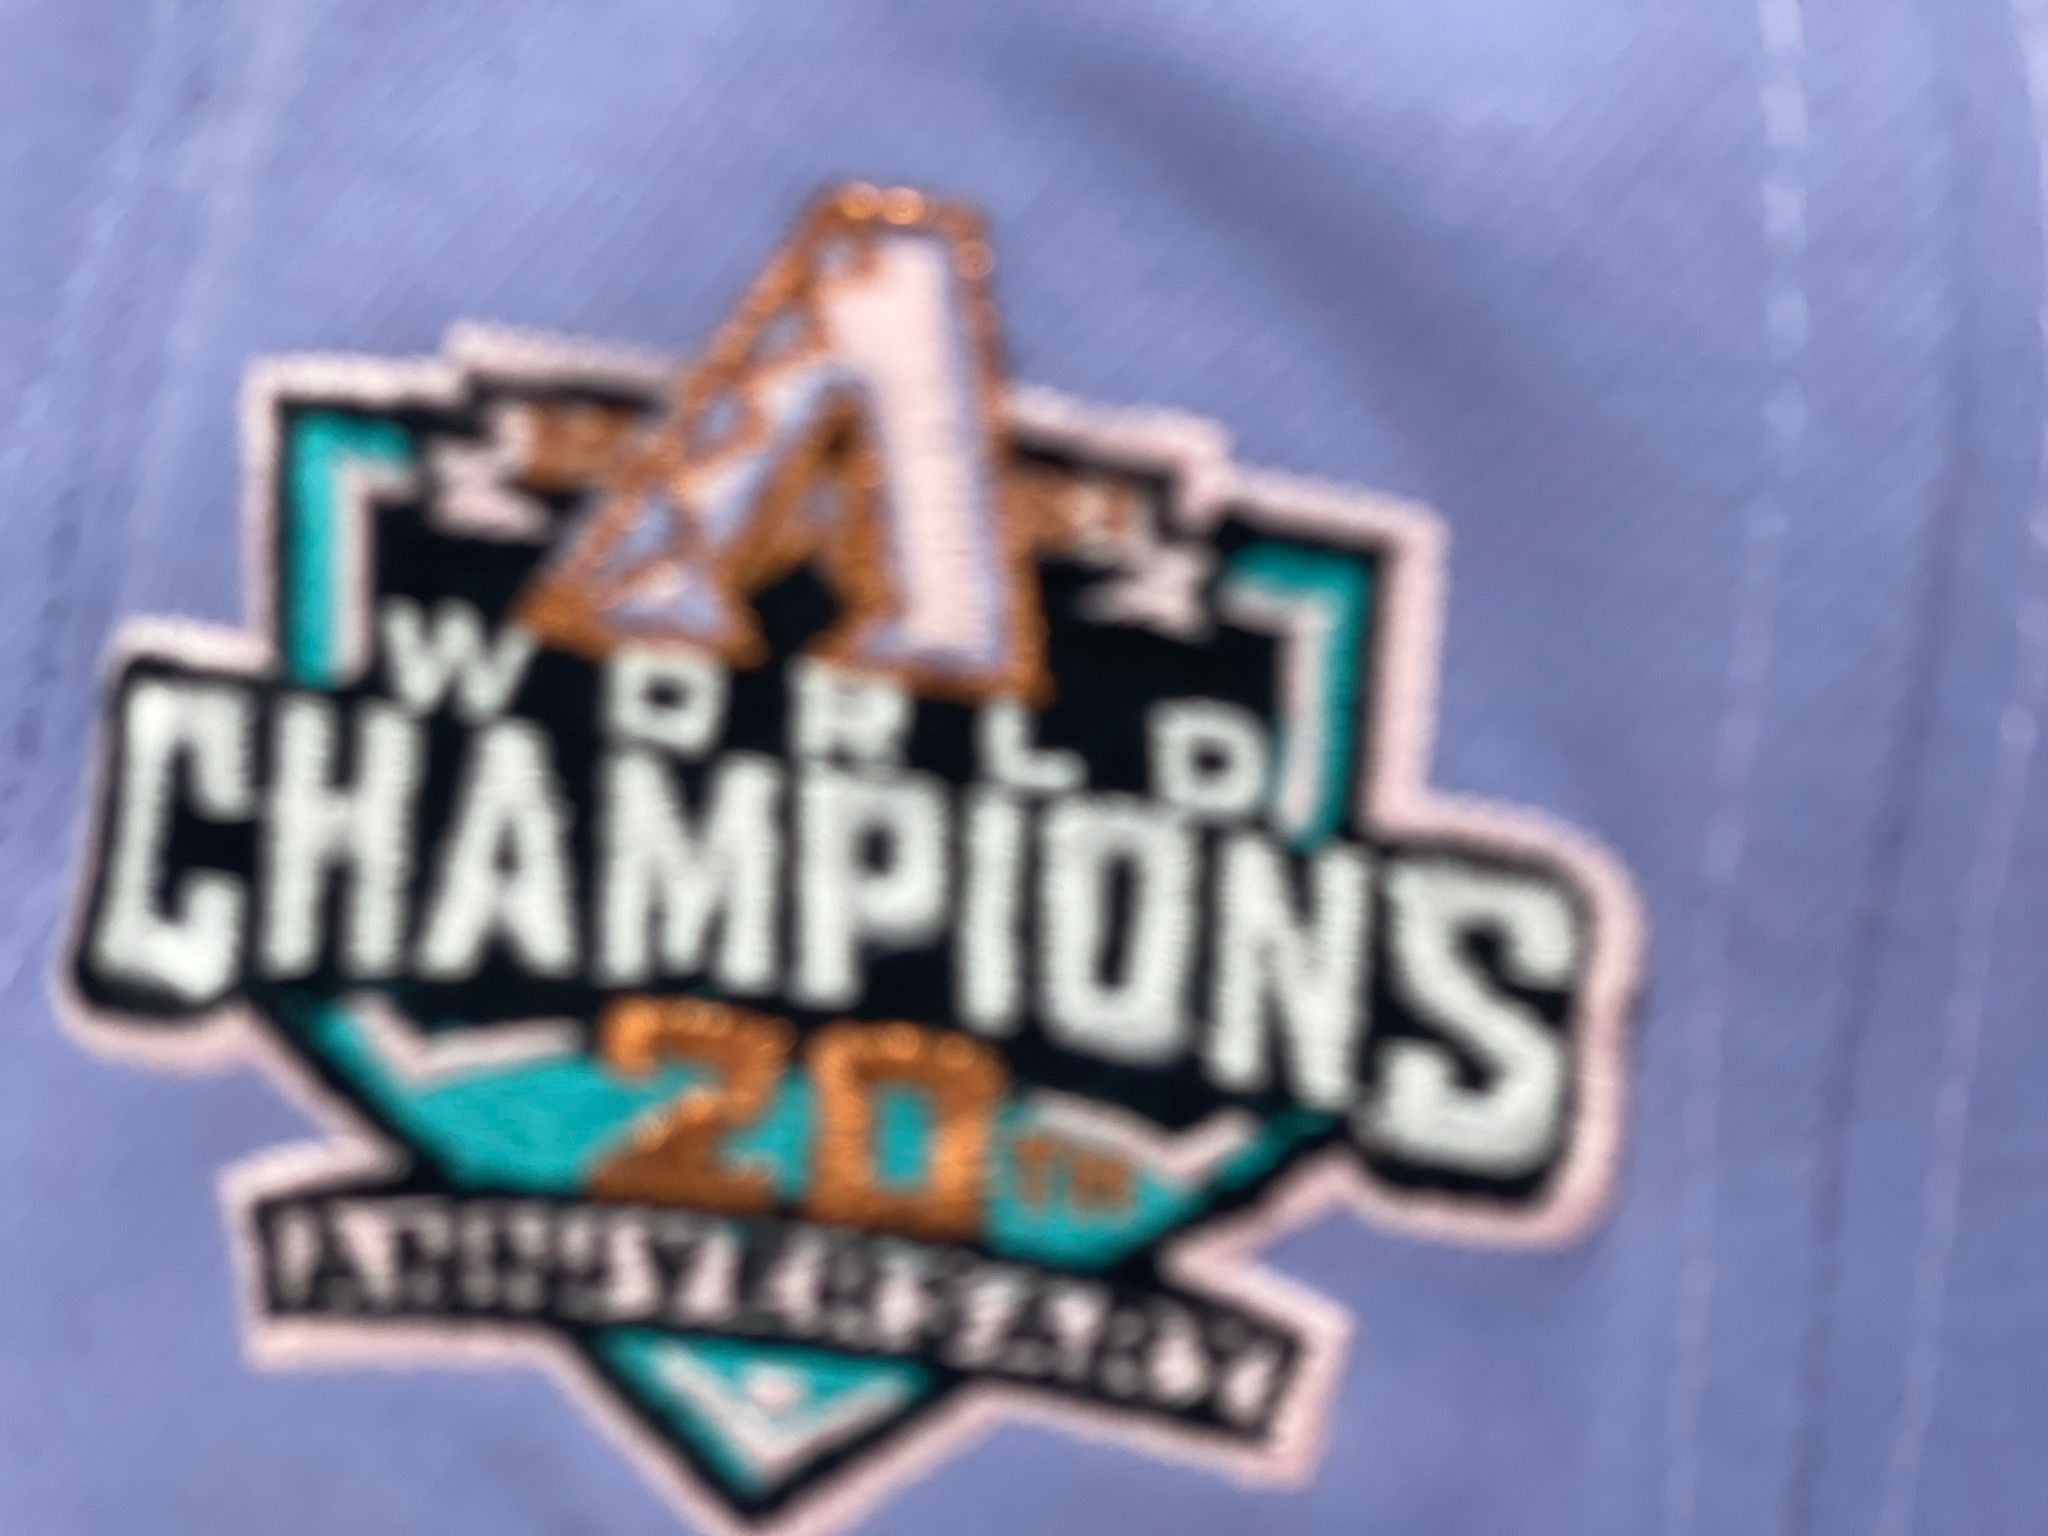 Purple Arizona Diamondbacks 20th Anniversary New Era Fitted Hat – Sports  World 165